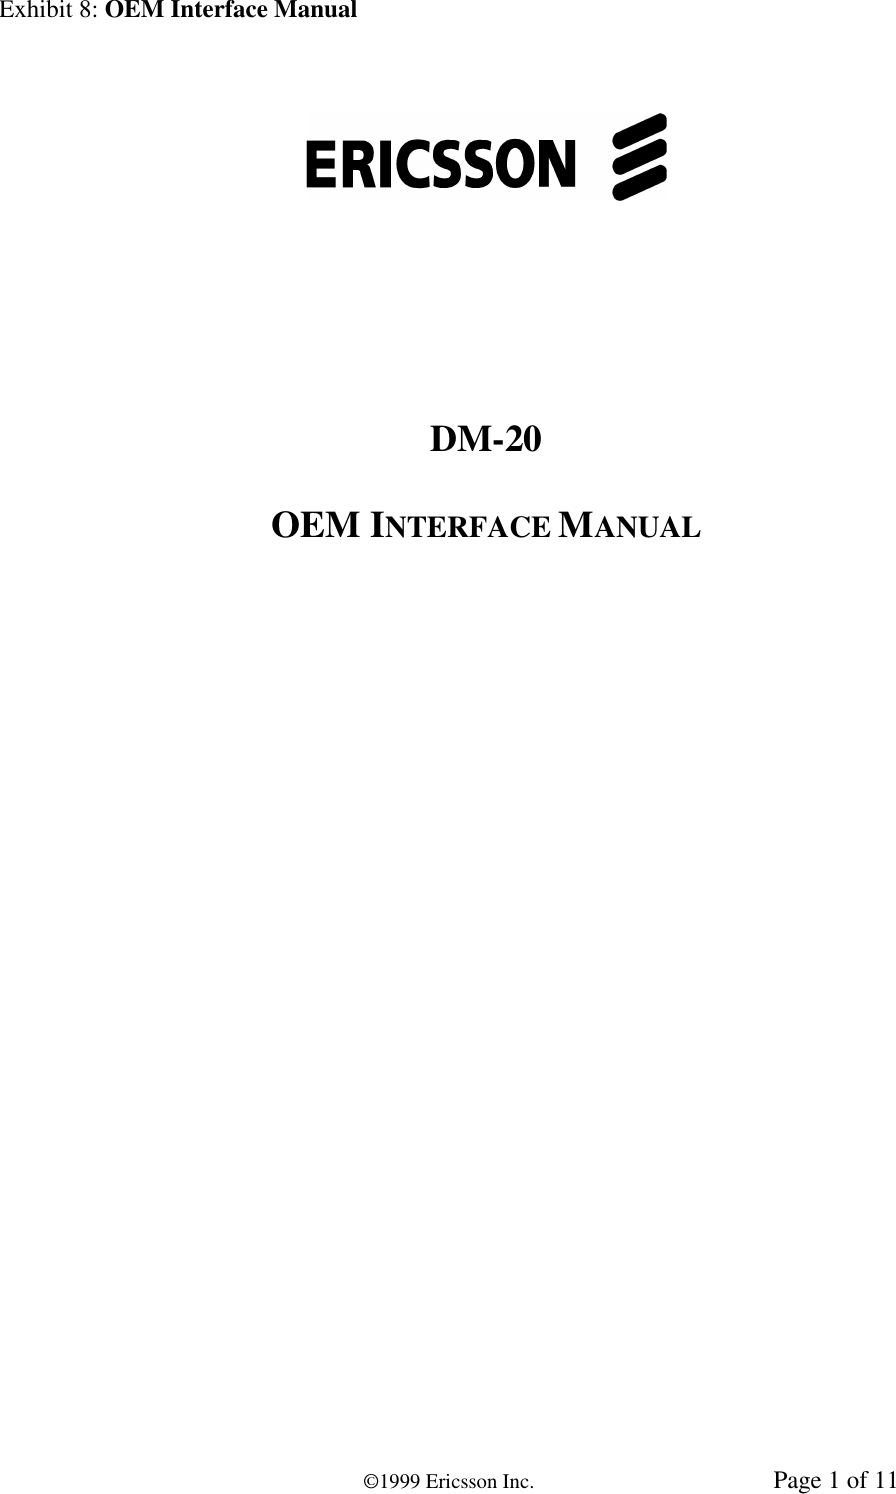 Exhibit 8: OEM Interface Manual©1999 Ericsson Inc. Page 1 of 11DM-20OEM INTERFACE MANUAL